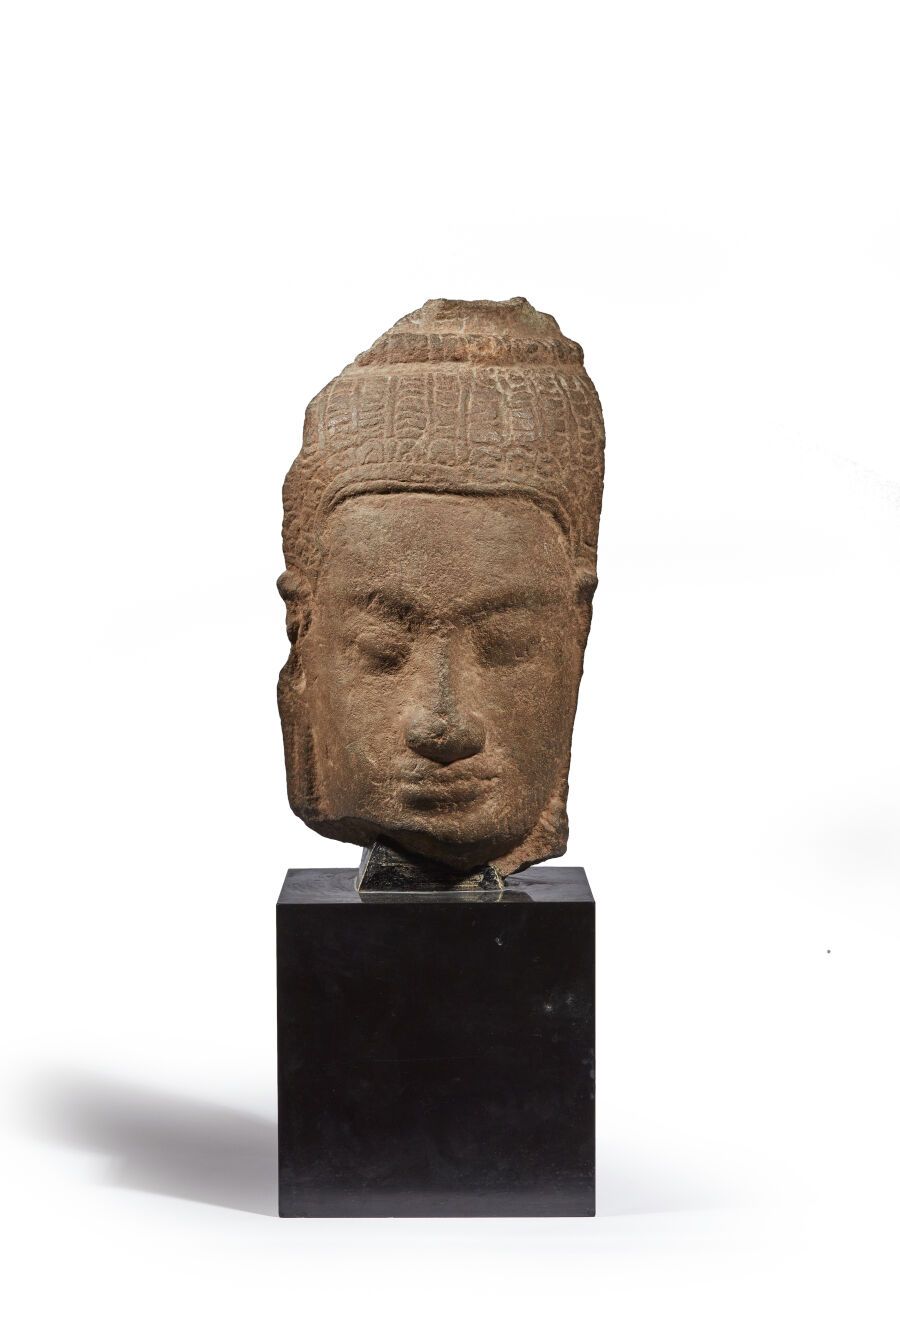 Null CAMBODGE - Période khmer, BAYON, XIIe-XIIIe siècles
Fragment de tête de bou&hellip;